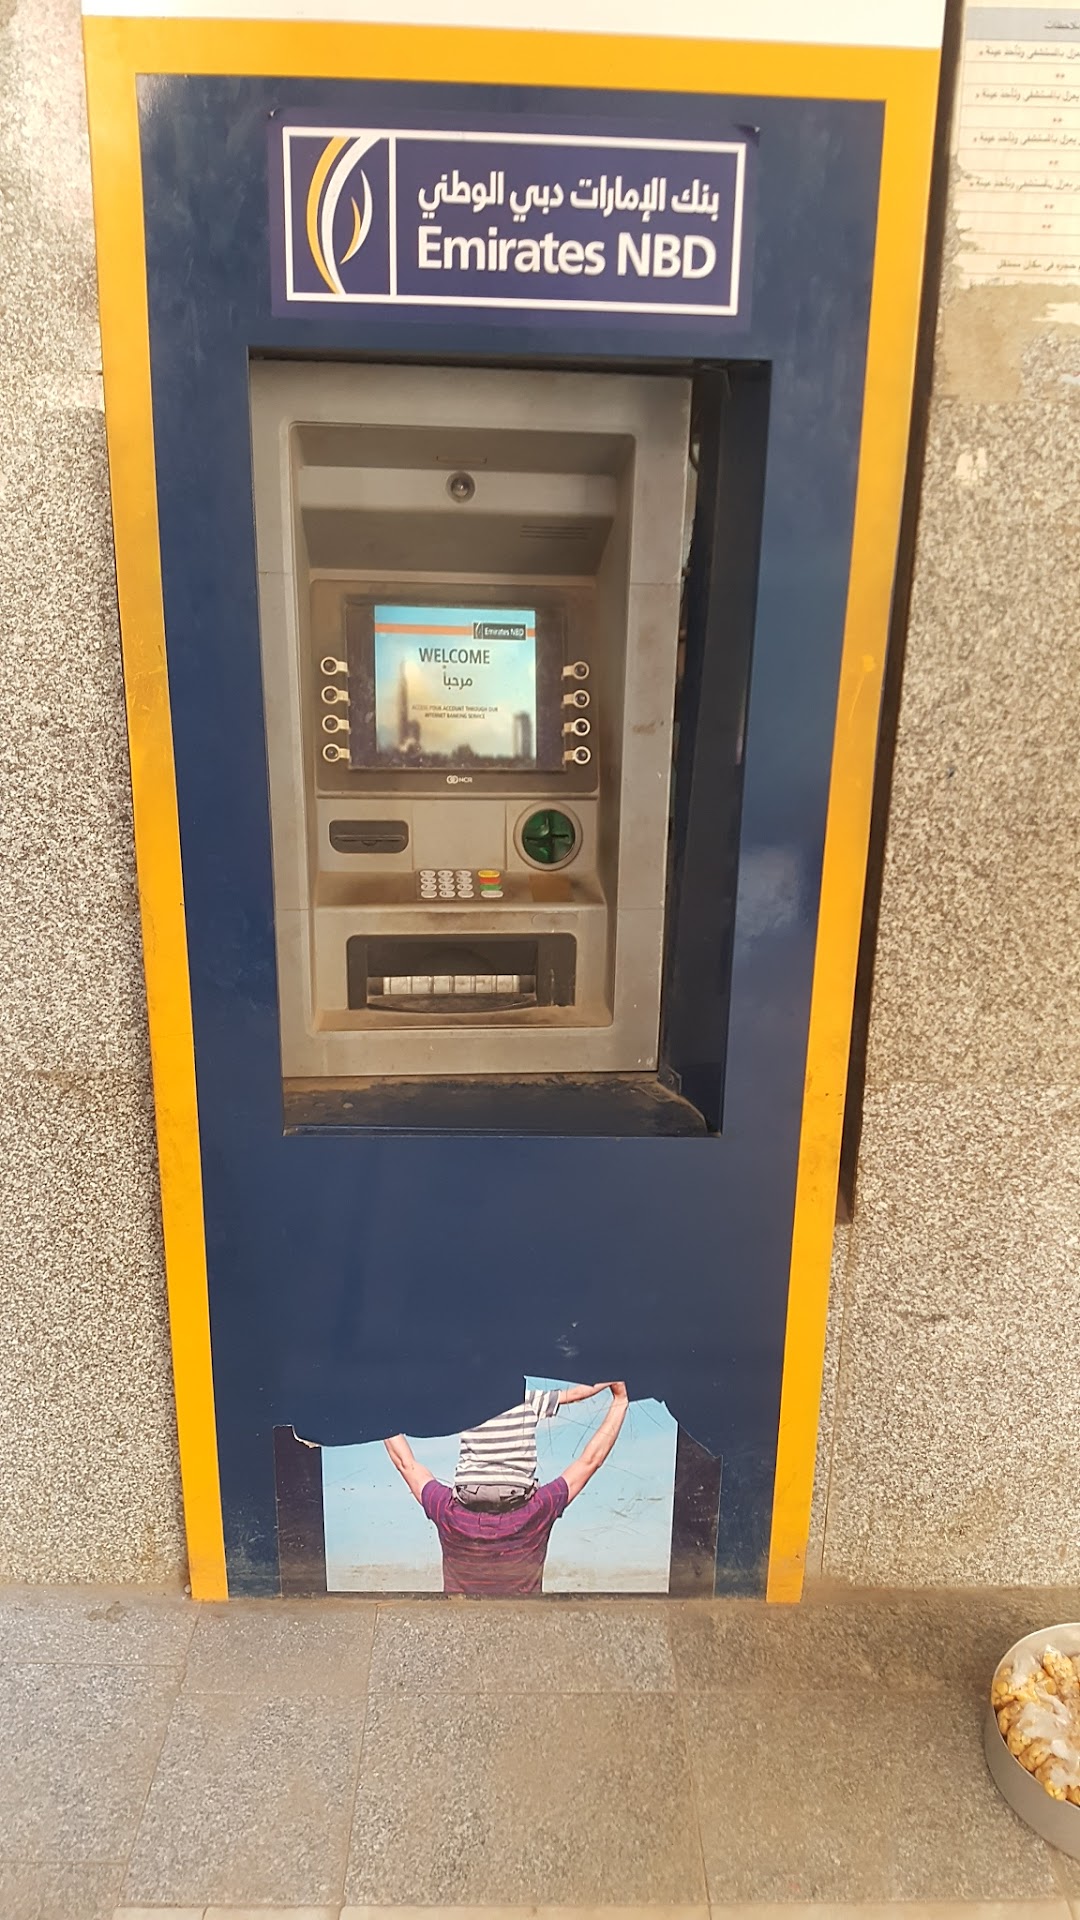 Emirates ENBD ATM